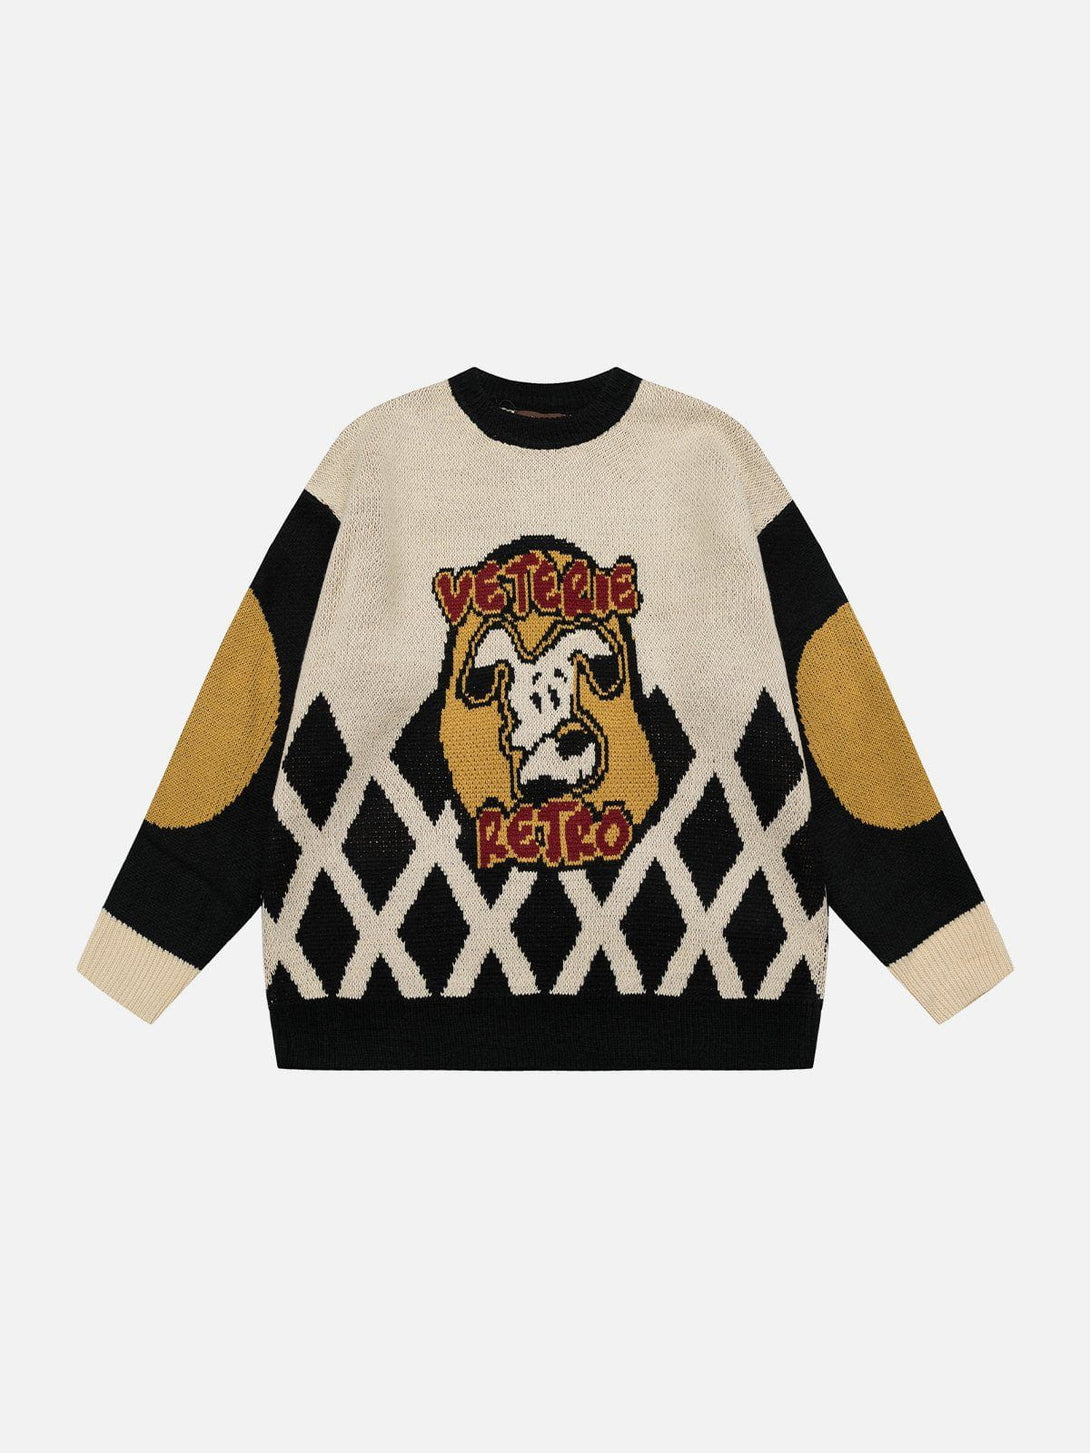 Majesda® - Doggy Grid Jacquard Sweater outfit ideas streetwear fashion